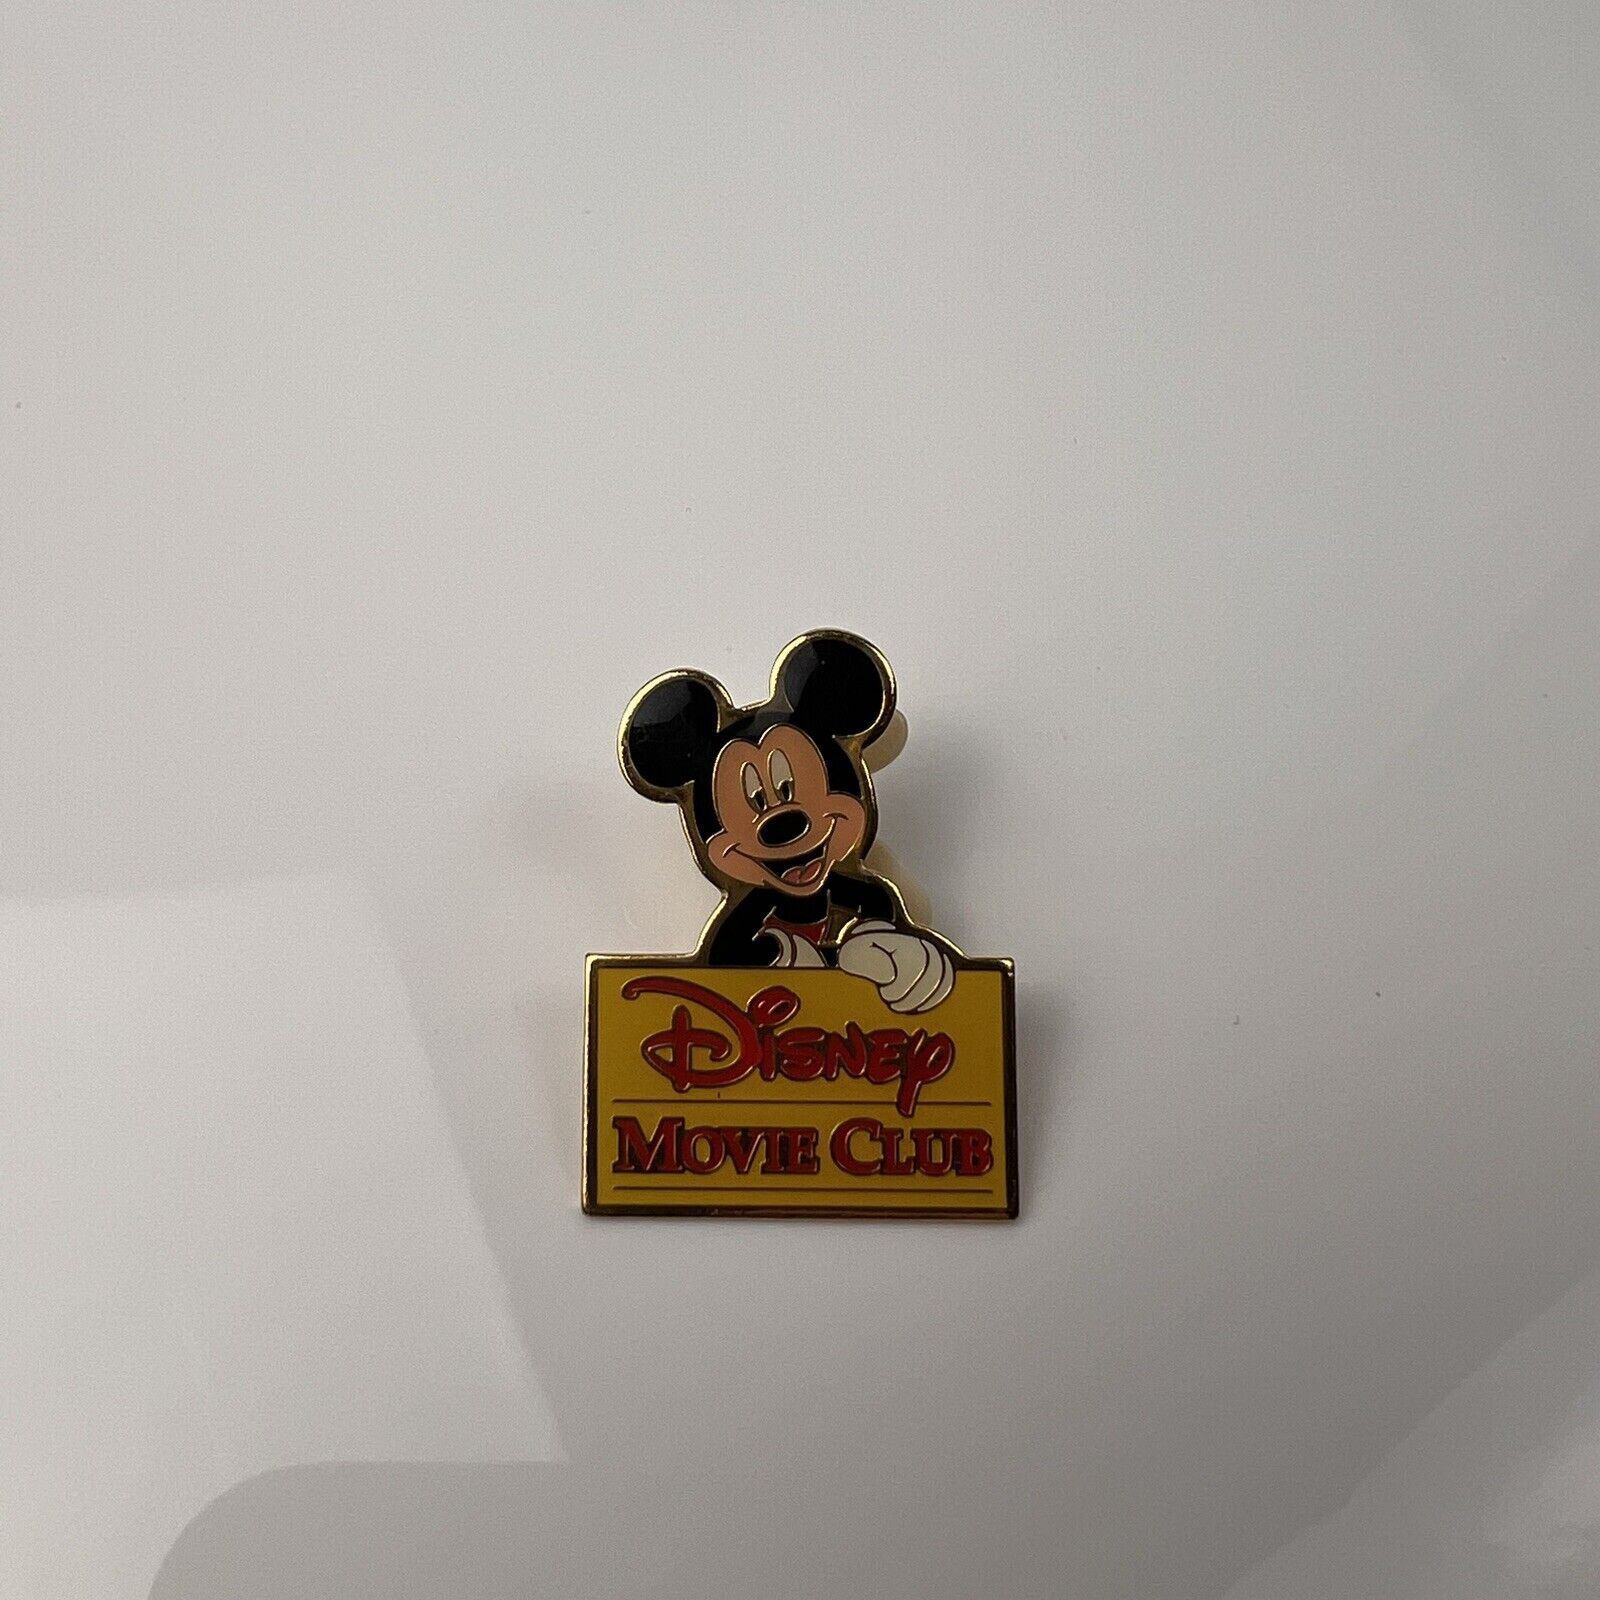 Disney Movie Club Exclusive Pin #1 - Mickey Mouse - Disney Pin 20883